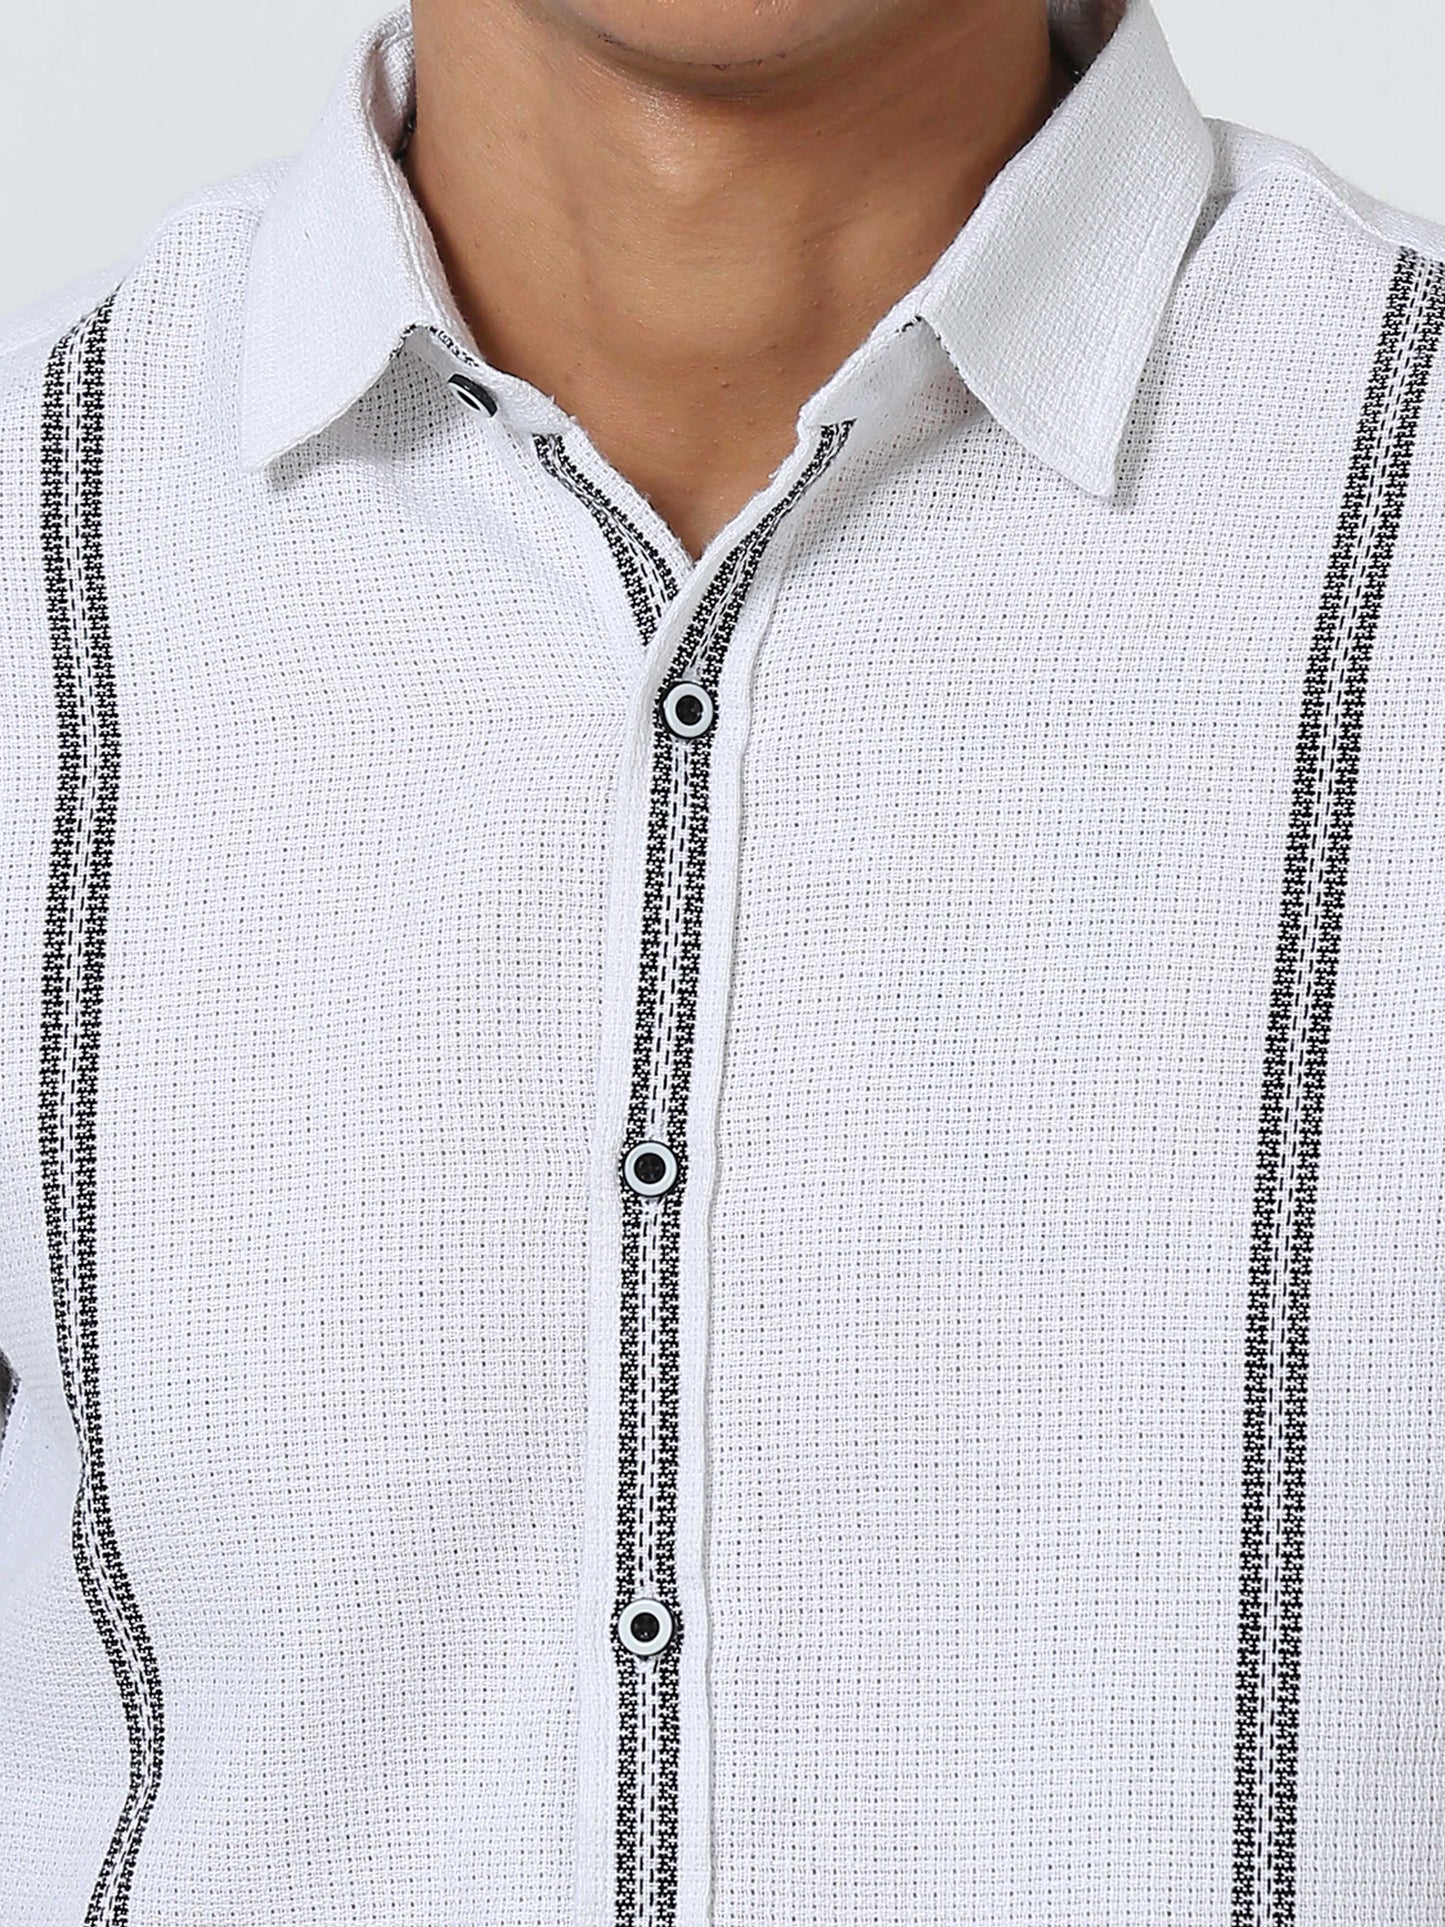 White & Black Stripe Shirt